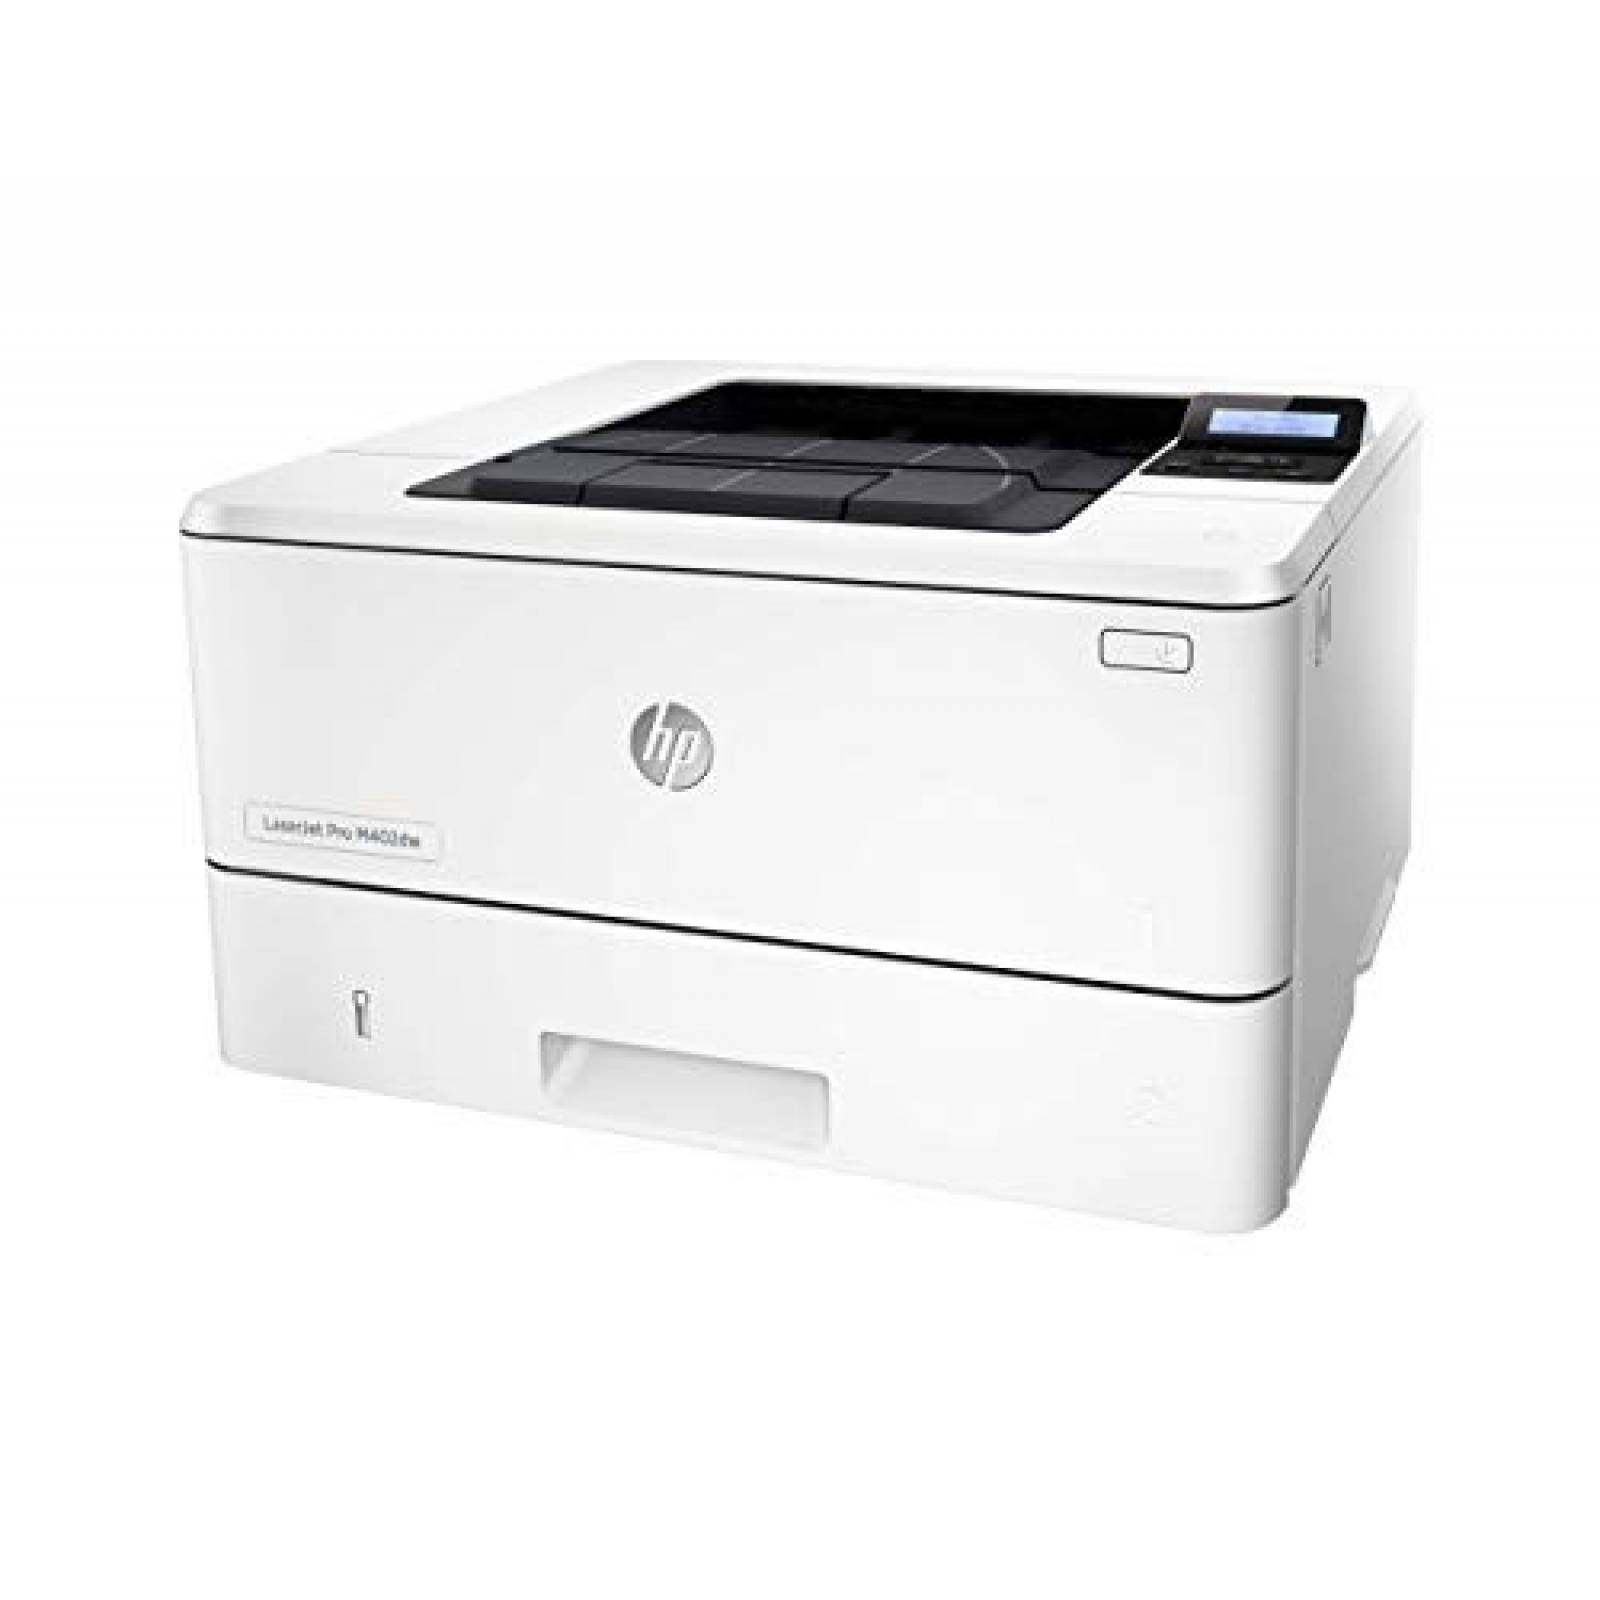 Impresora láser HP M402dw Laserjet Pro Monochrome -Blanco